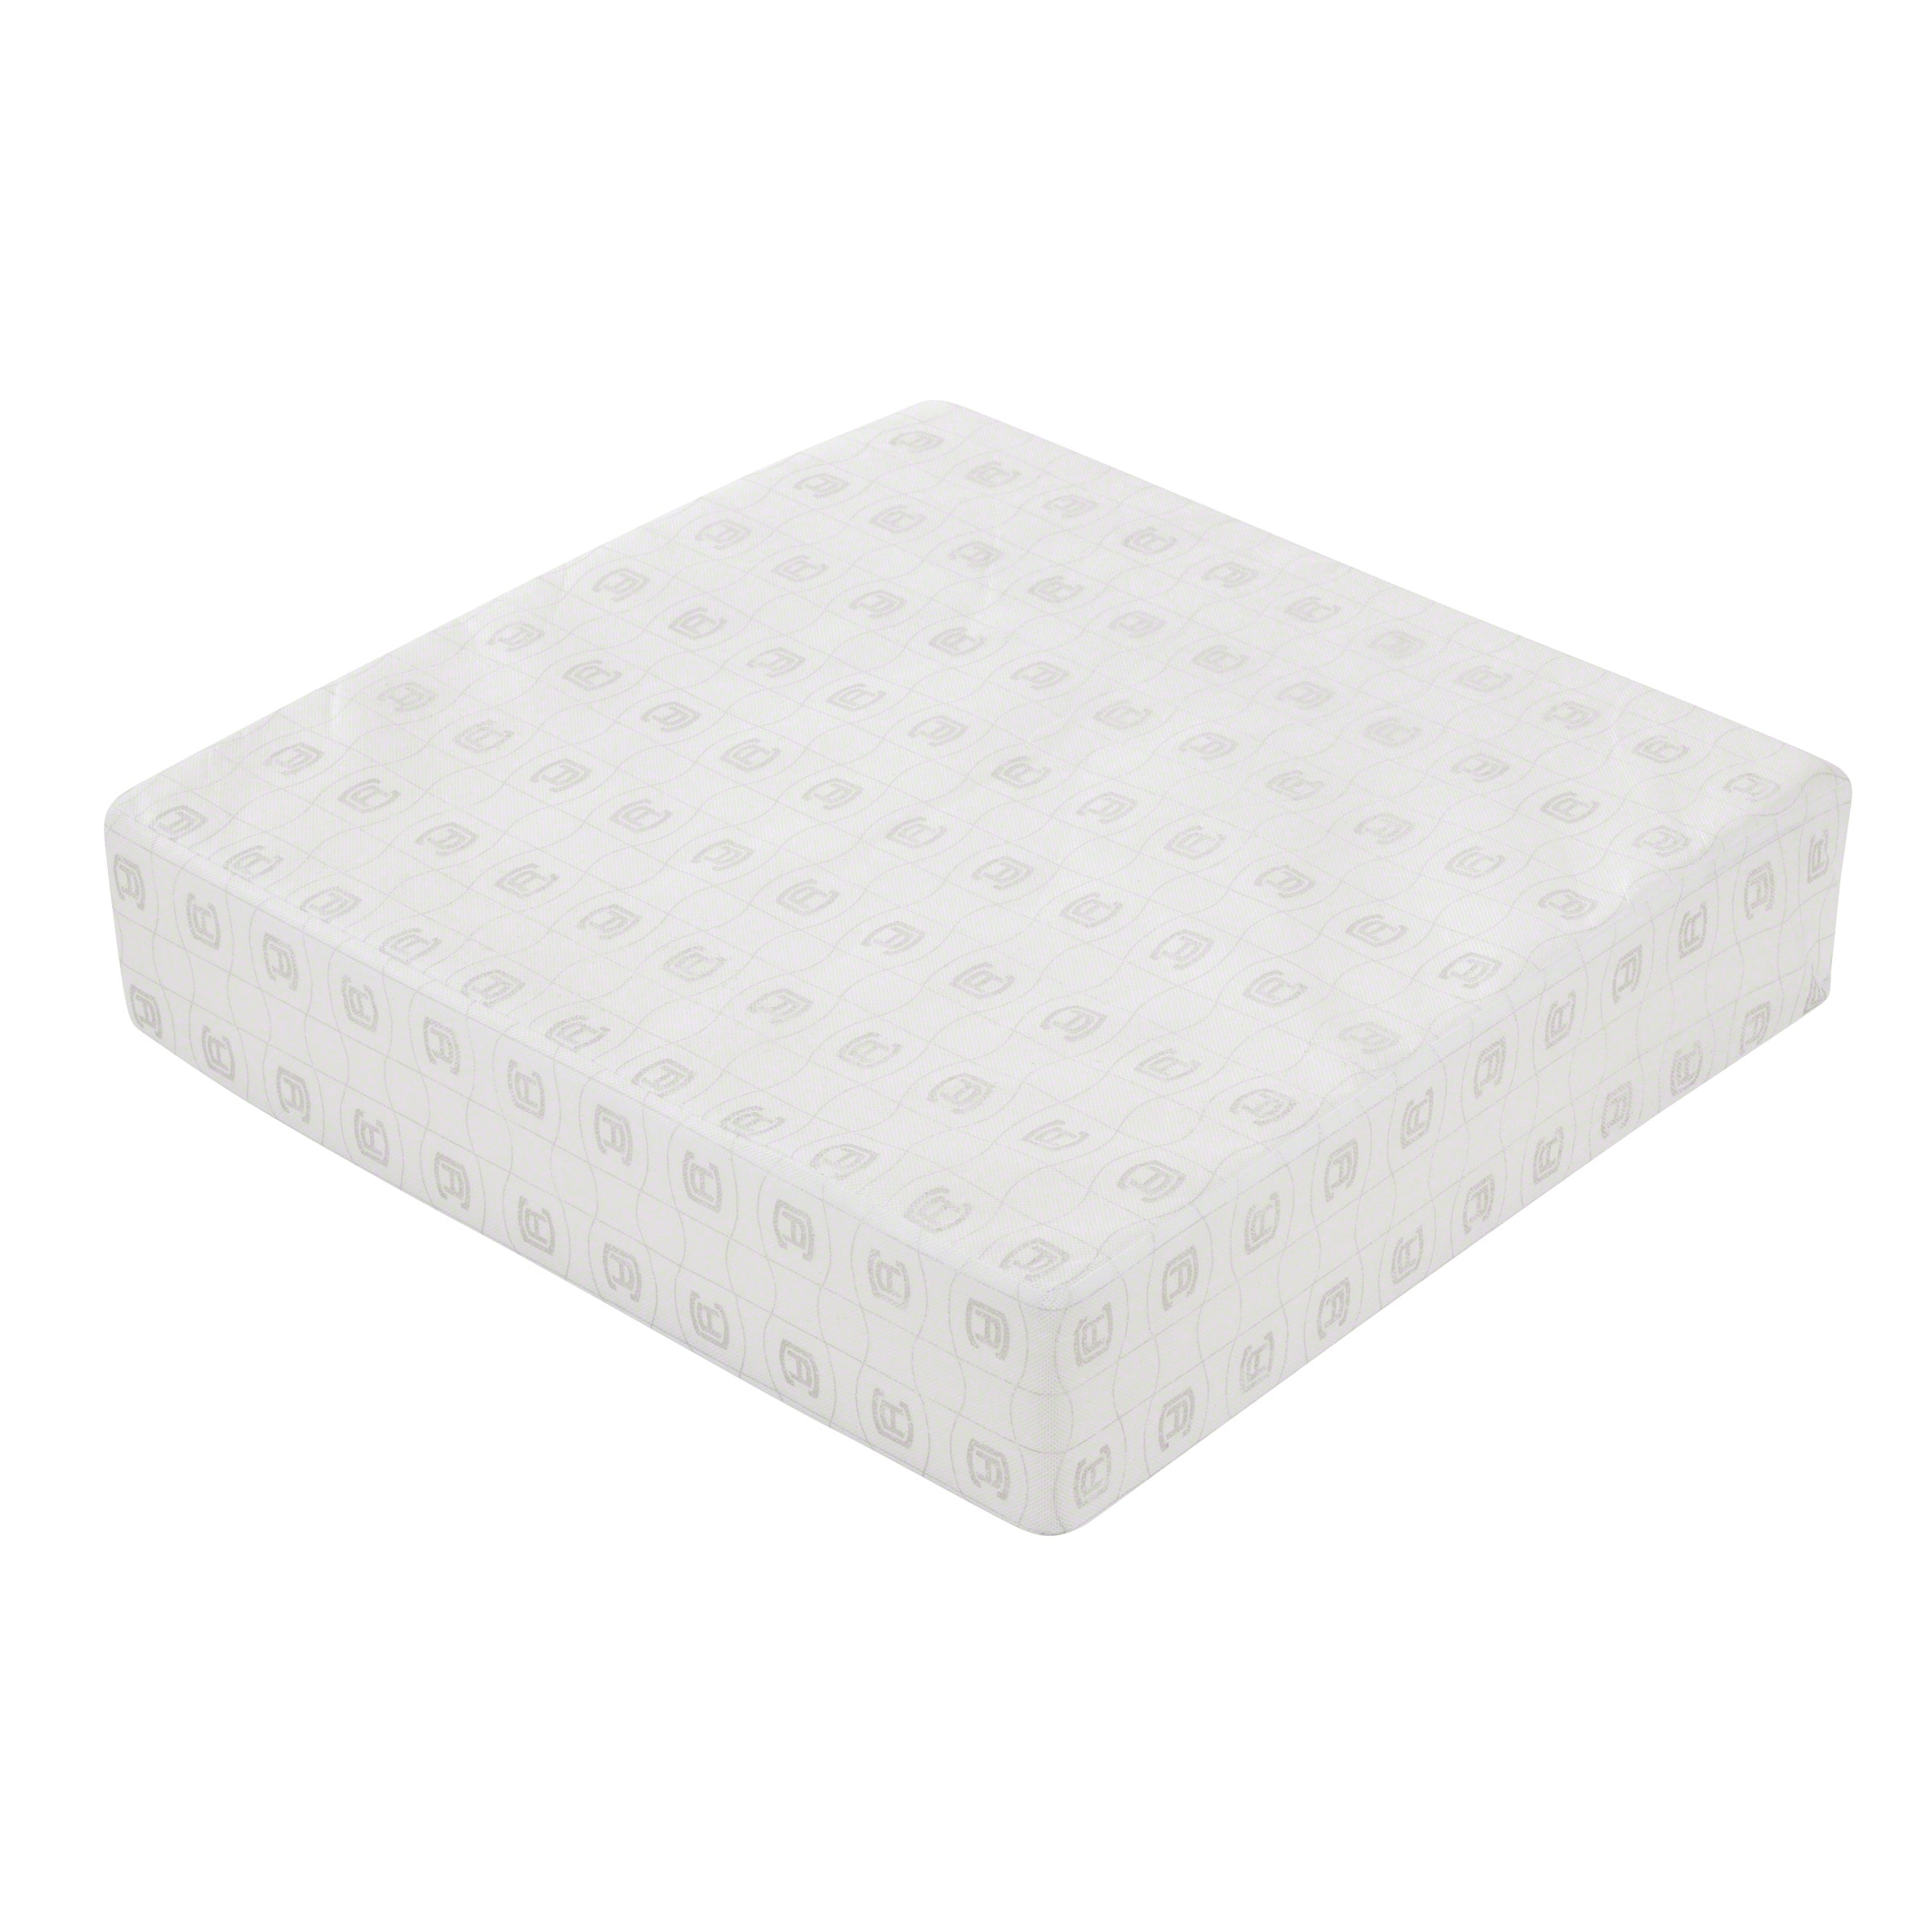 Multipurpose Upholstery Foam,High Density Foam Cushion Thick Seat Pads  Memory Foam Padding Sheet,Soft Foam Pad for Pet Mattress/Wood Case  Lining/Chair